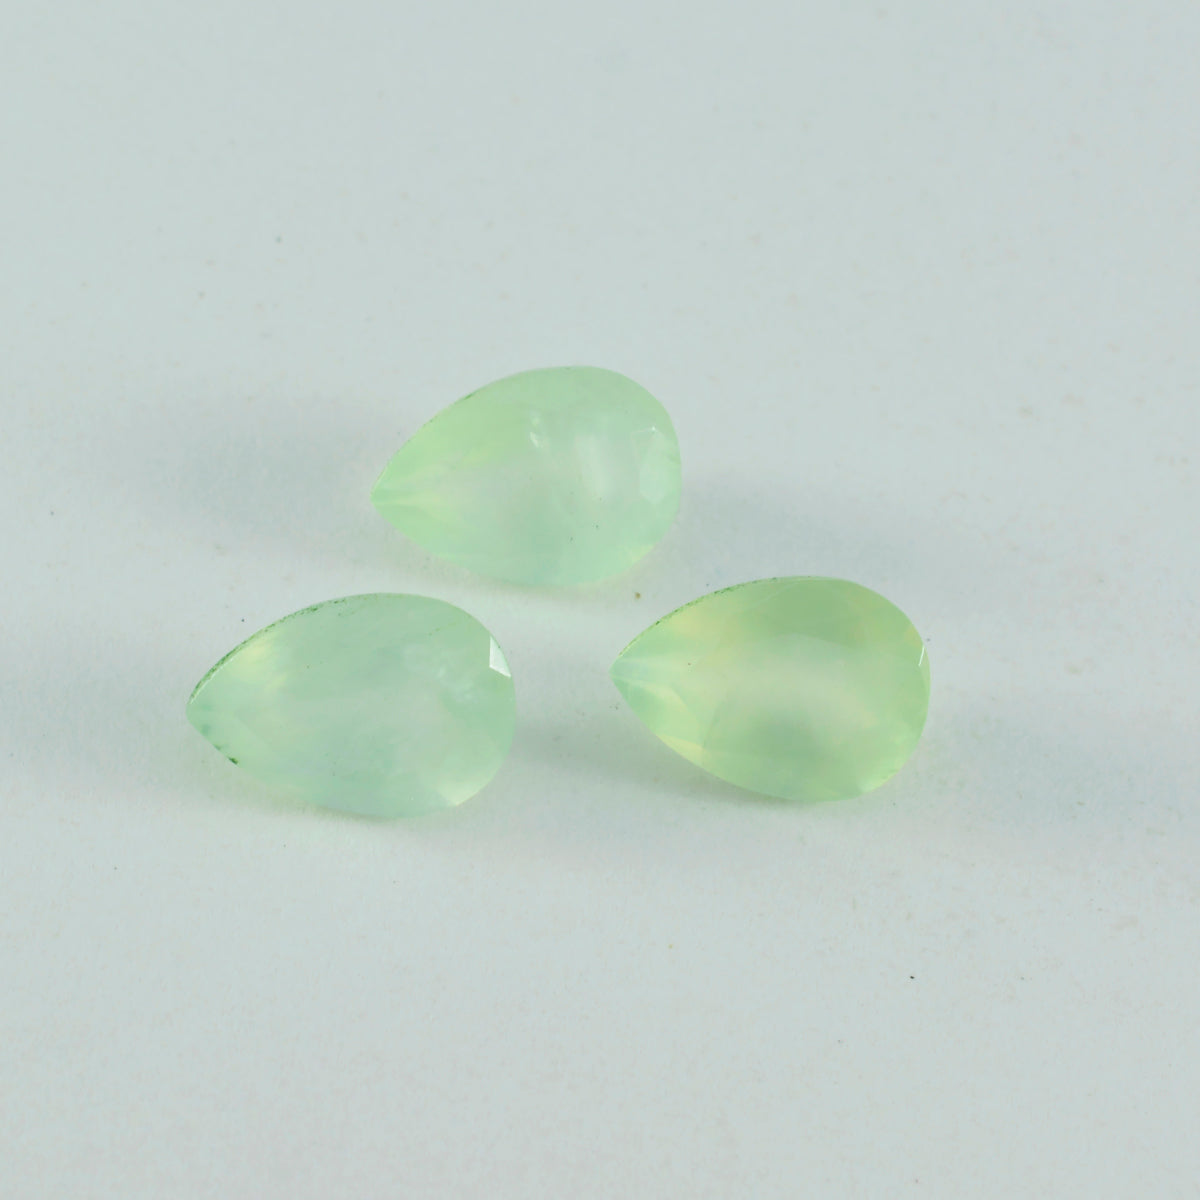 Riyogems 1PC Green Prehnite Faceted 12x16 mm Pear Shape superb Quality Stone